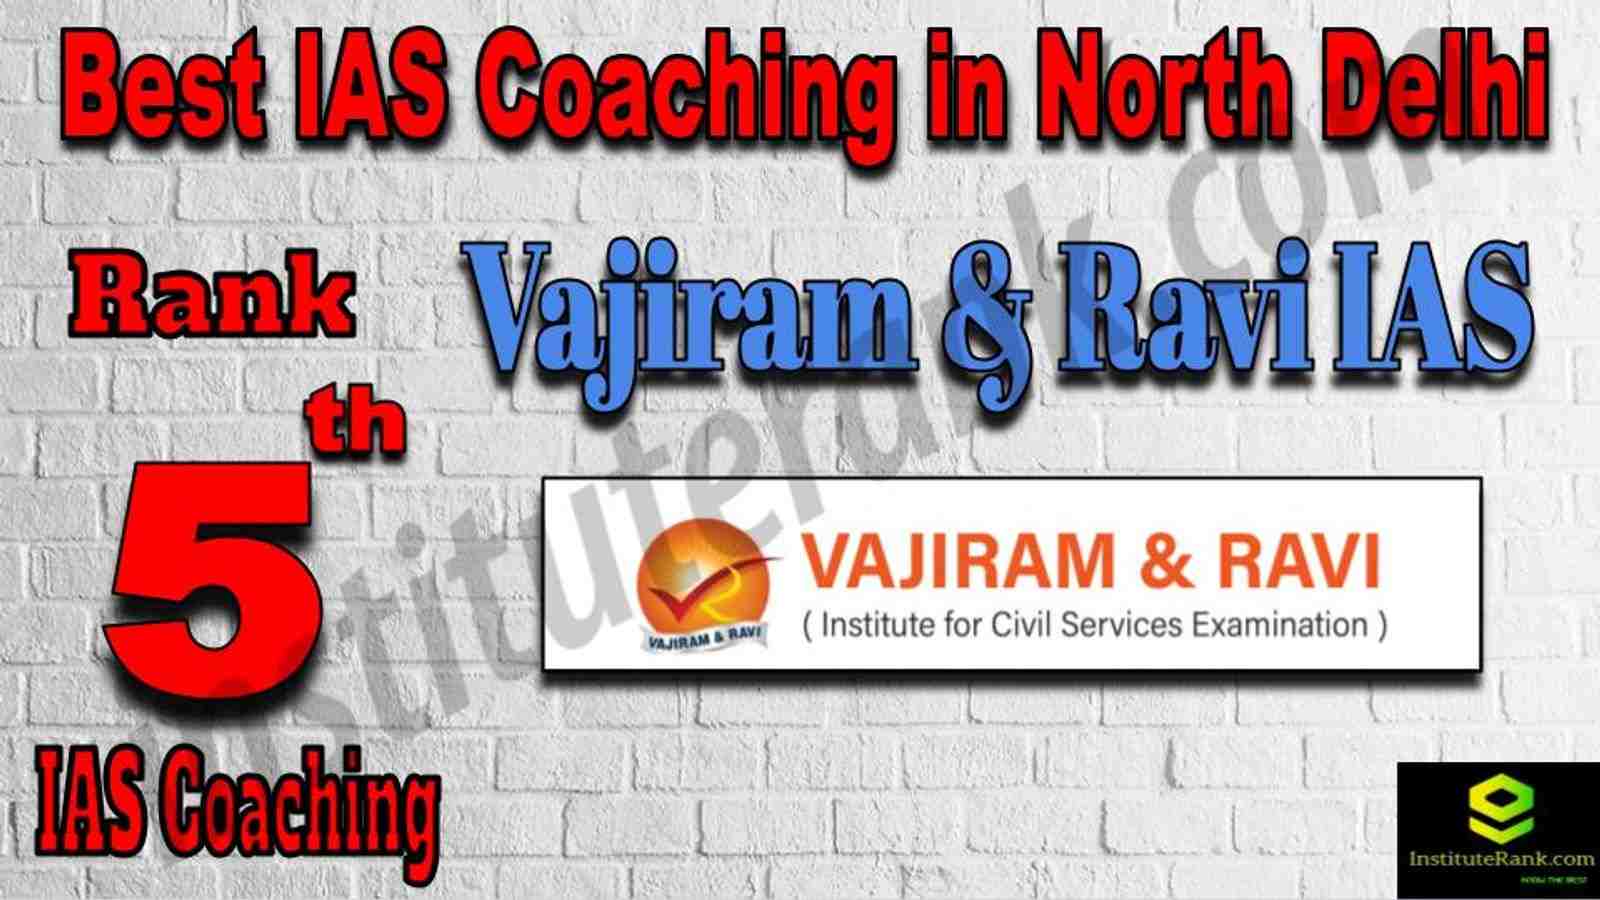 5th Best IAS Coaching in North Delhi